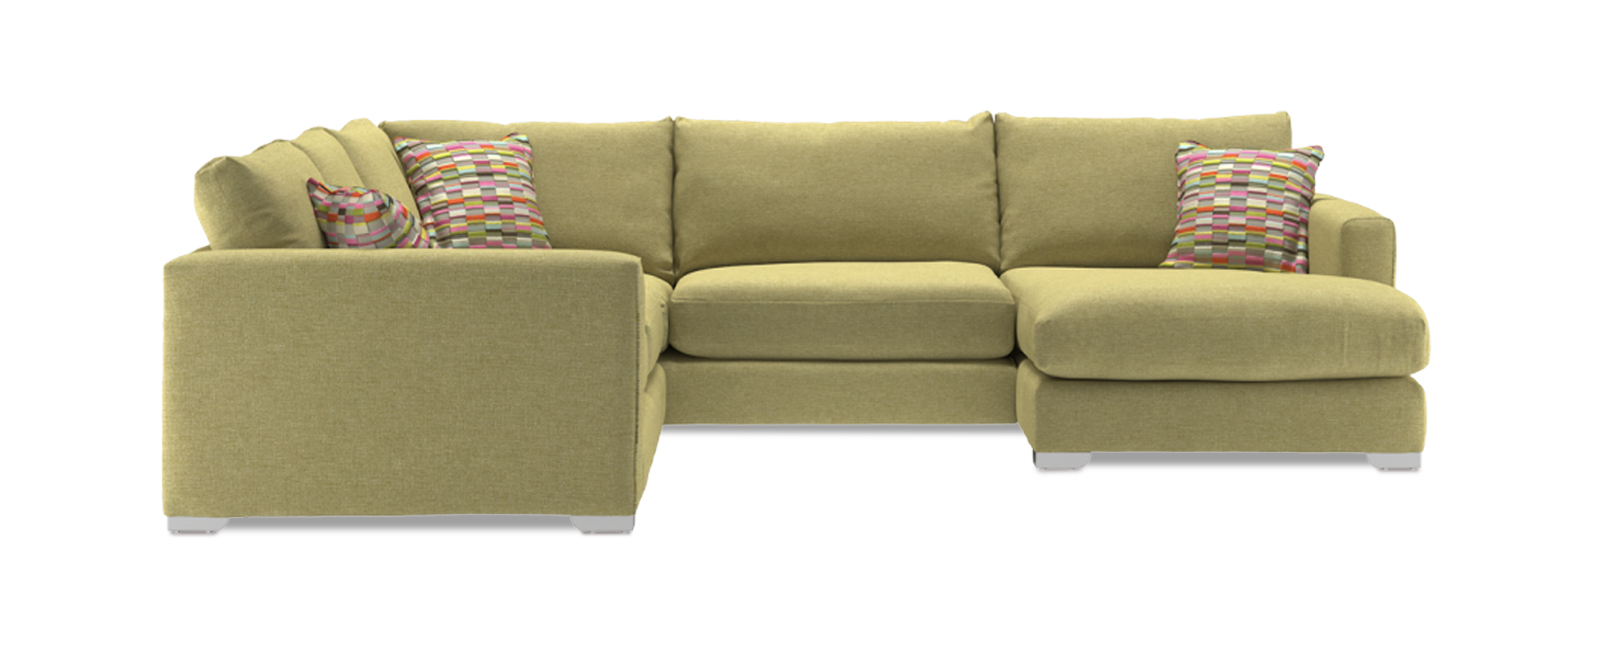 Sofology Majestic green fabric corner sofa